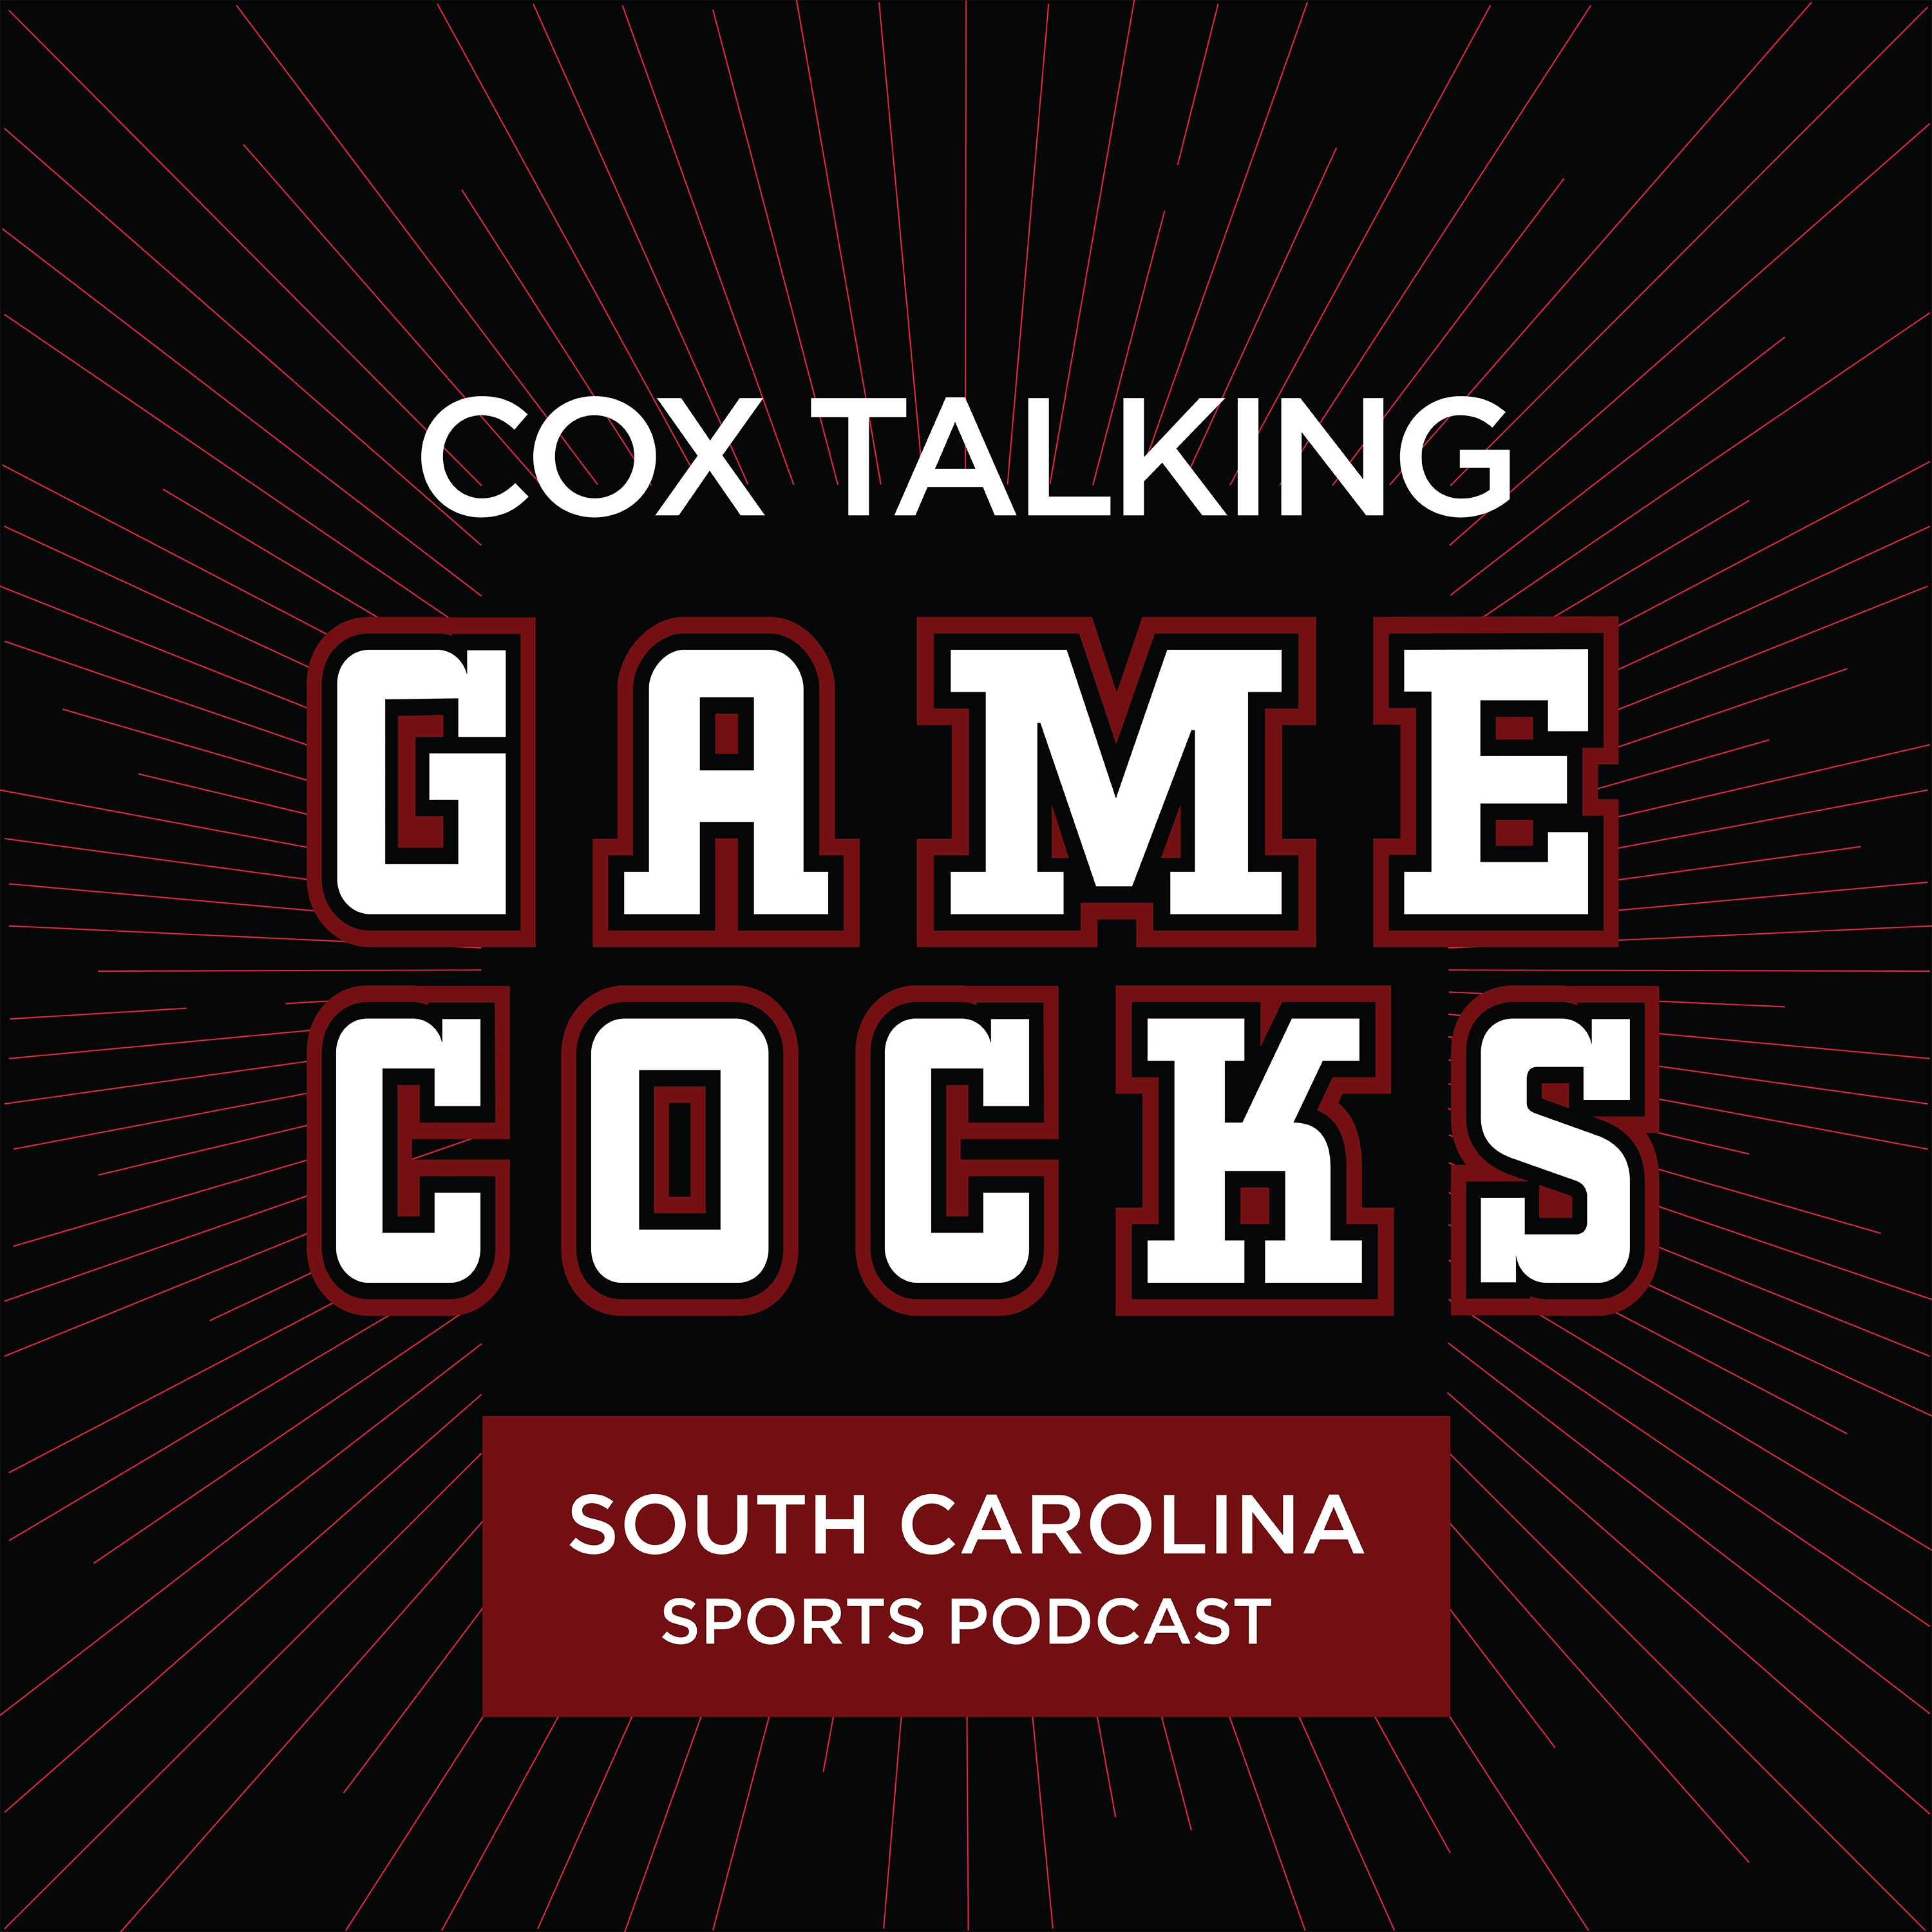 Gamecocks Fall To Rival: Postgame Reaction + Basketball Previews